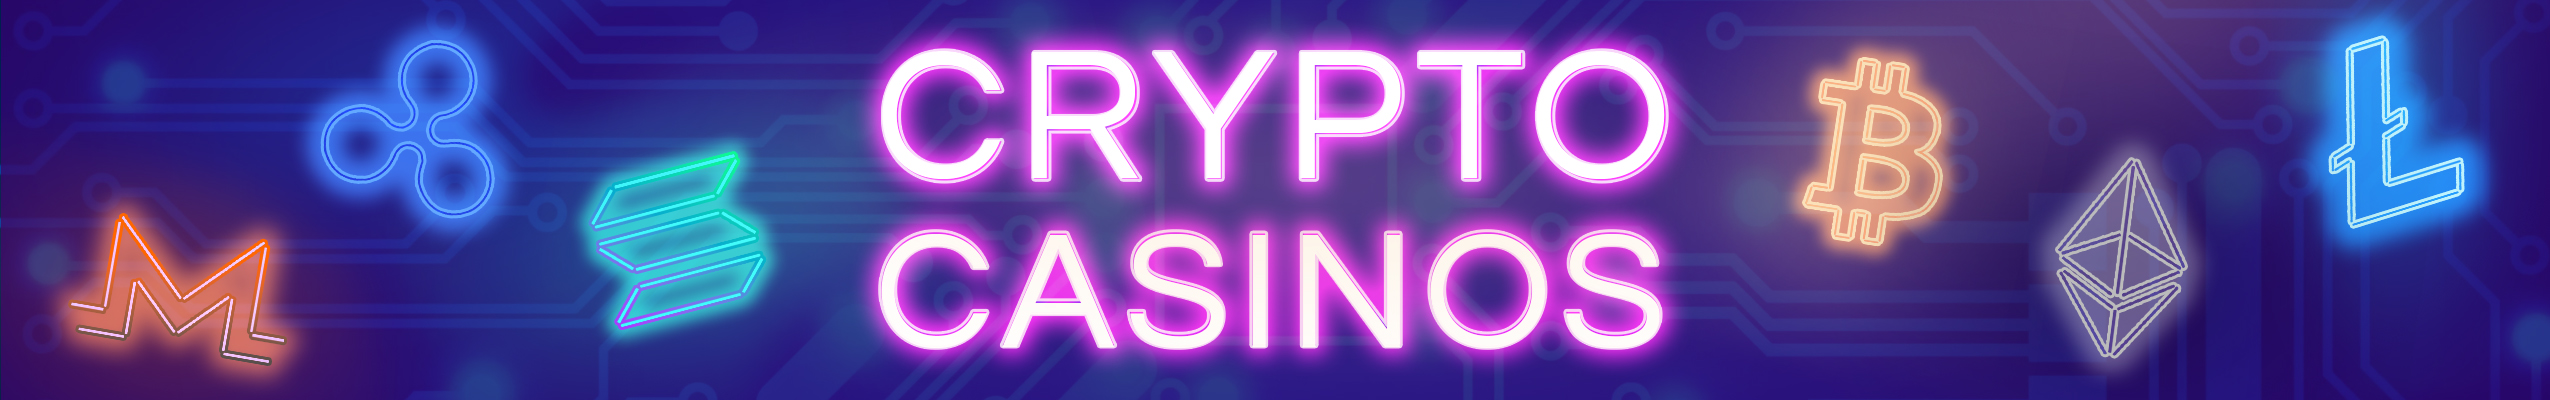 Crypto Casinos ohne Limit Teaser